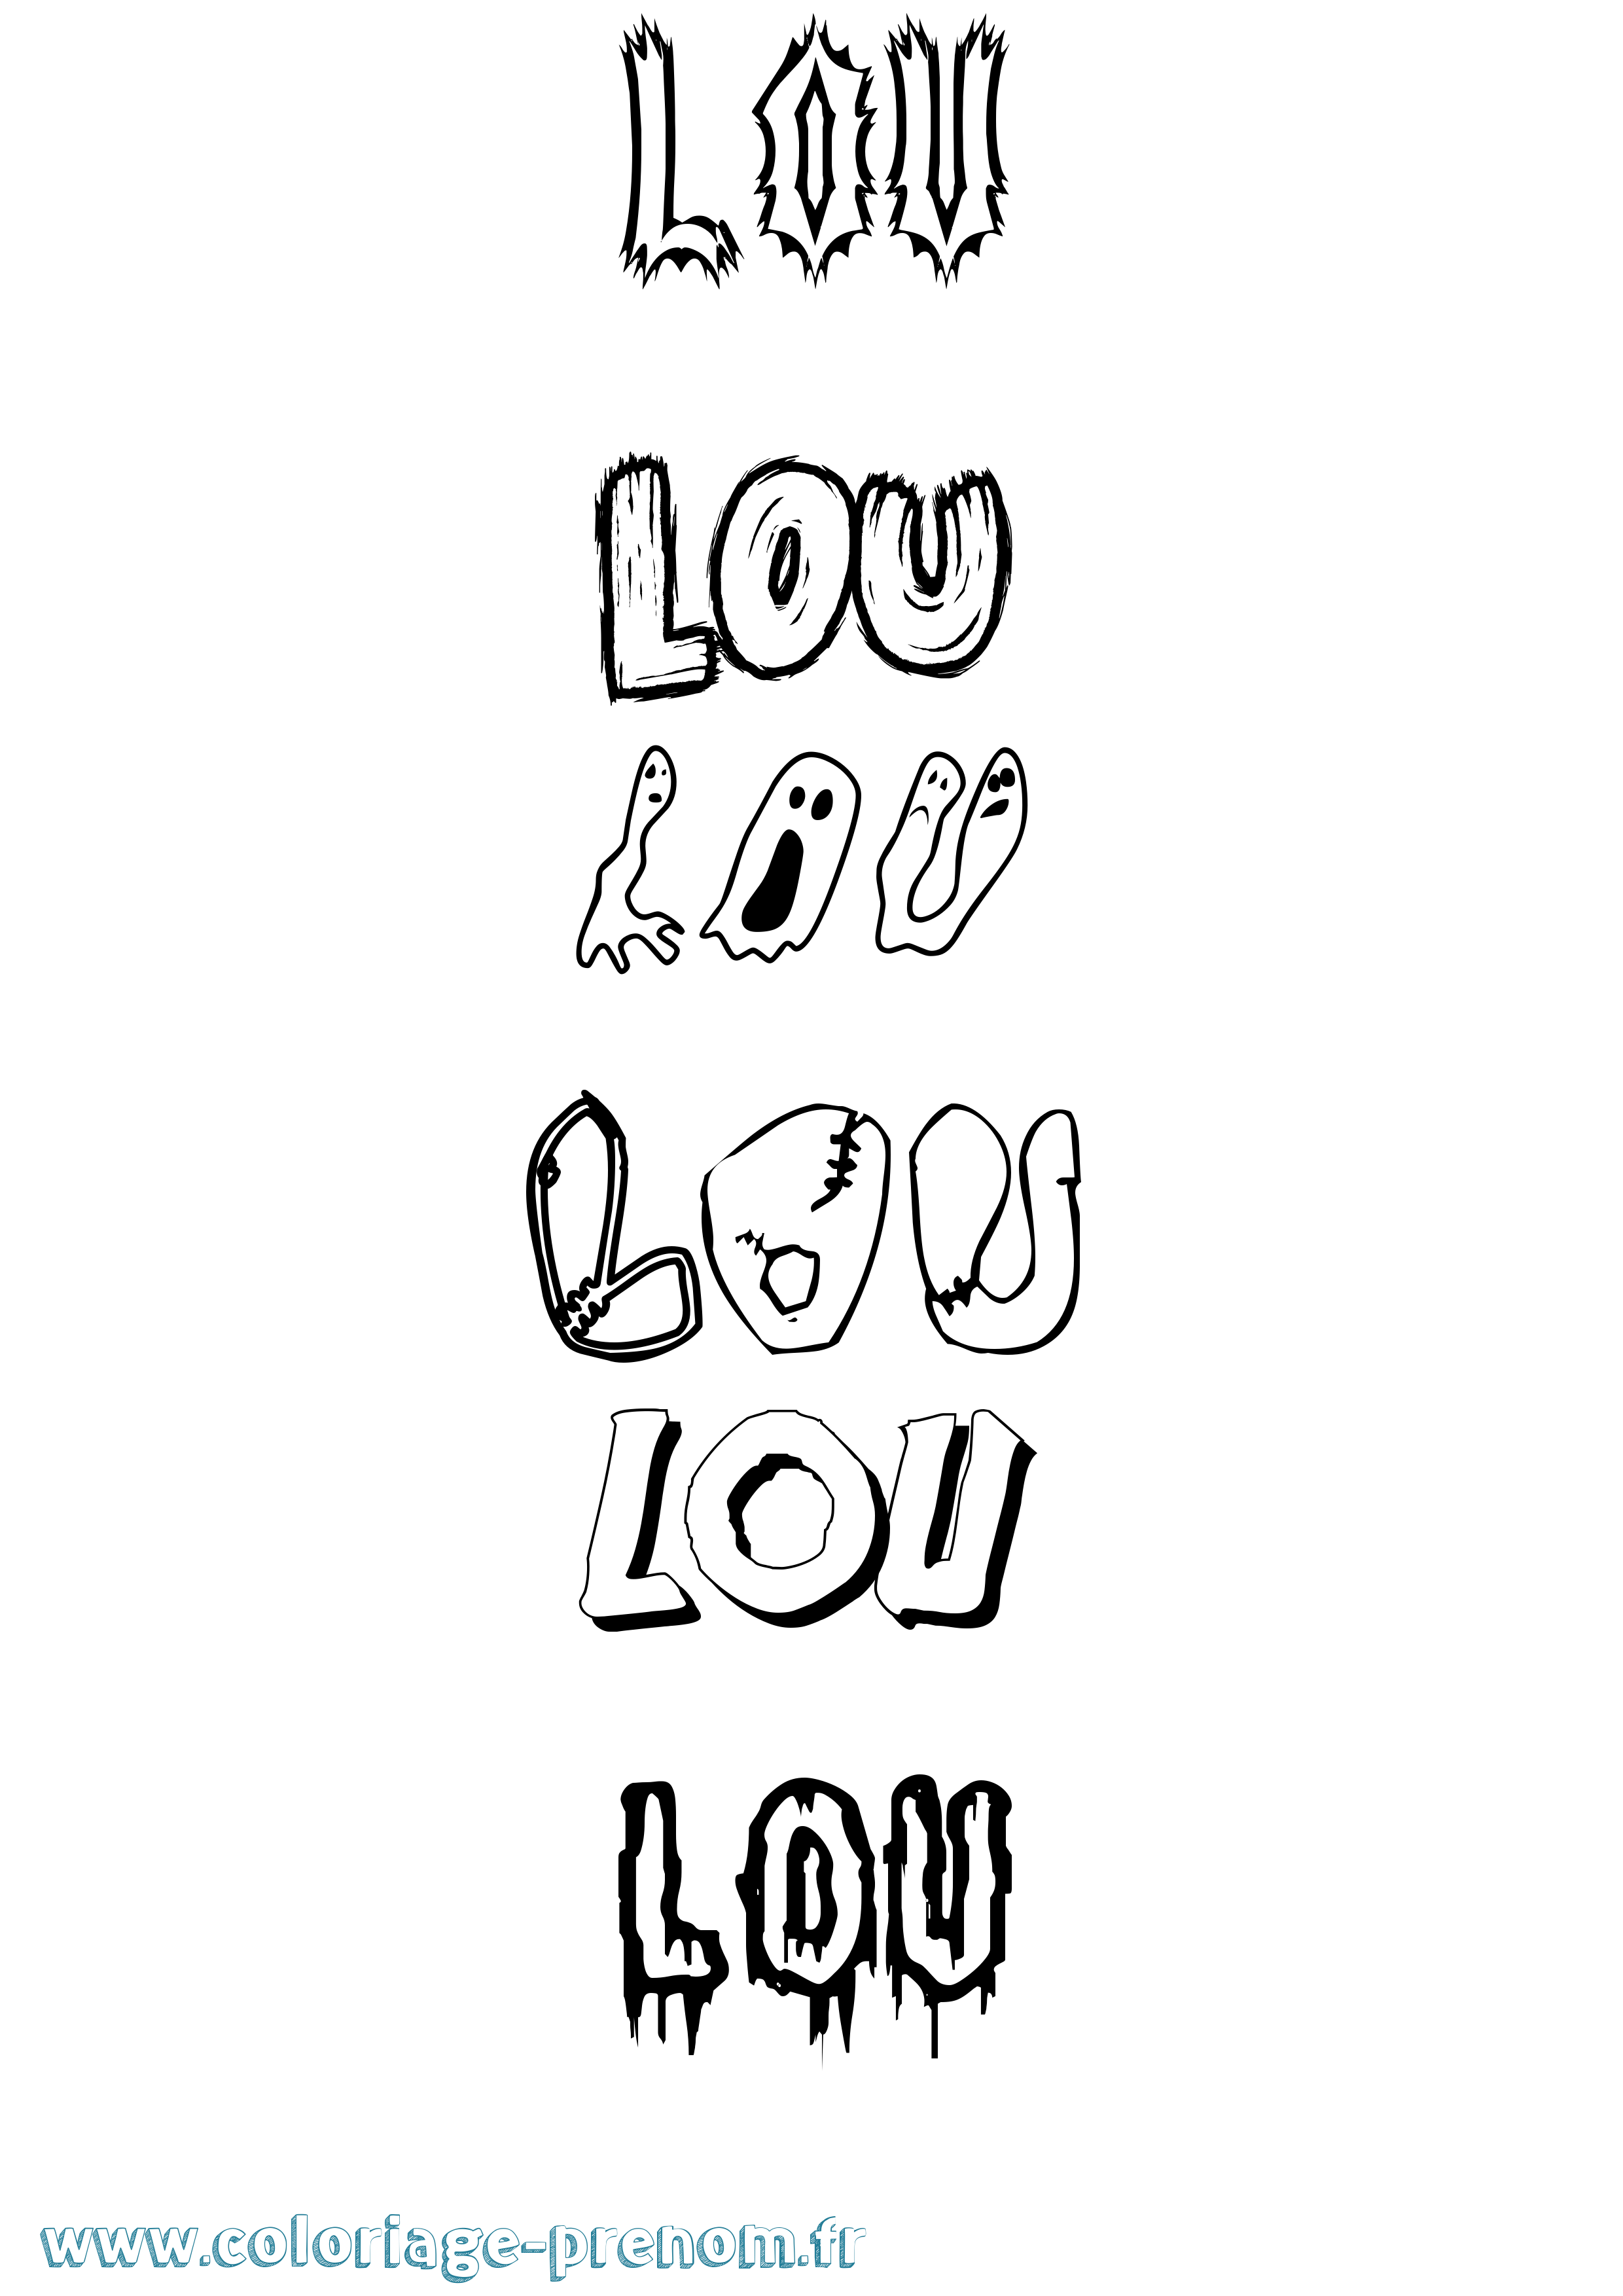 Coloriage prénom Lou